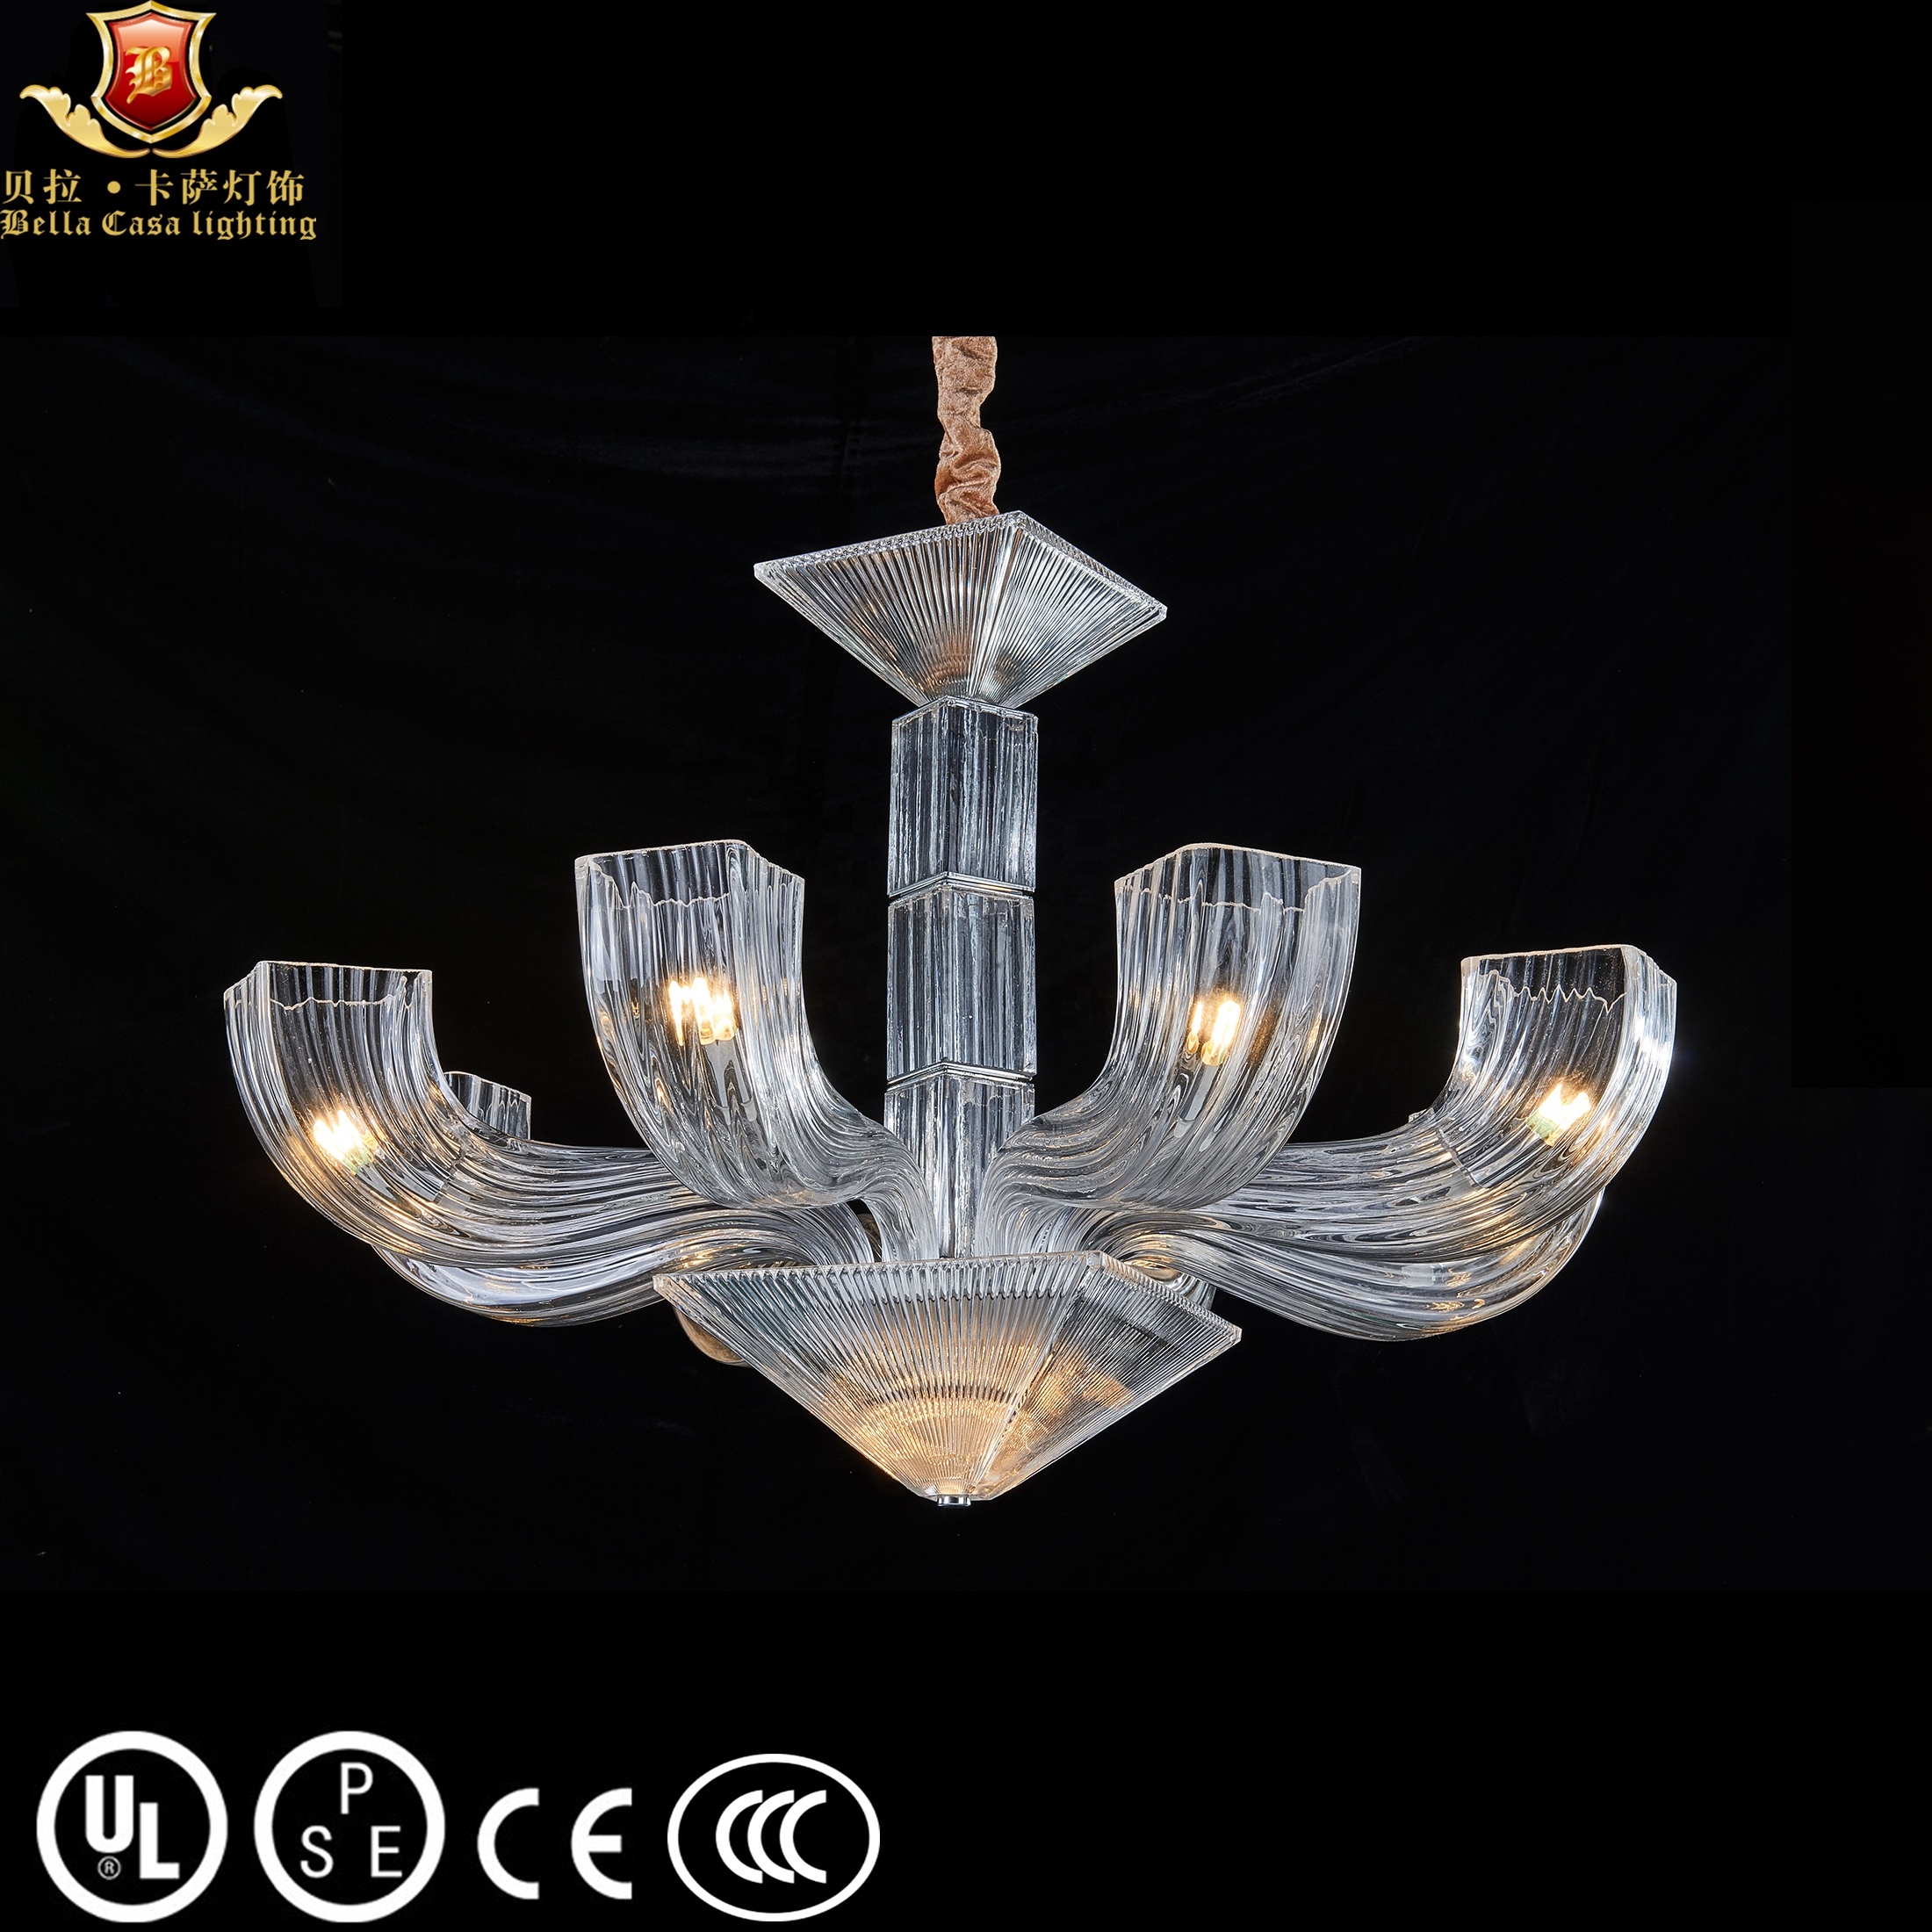 Energy saving 8 light hotel lobby decorative european vintage luxury led crystal chandelier